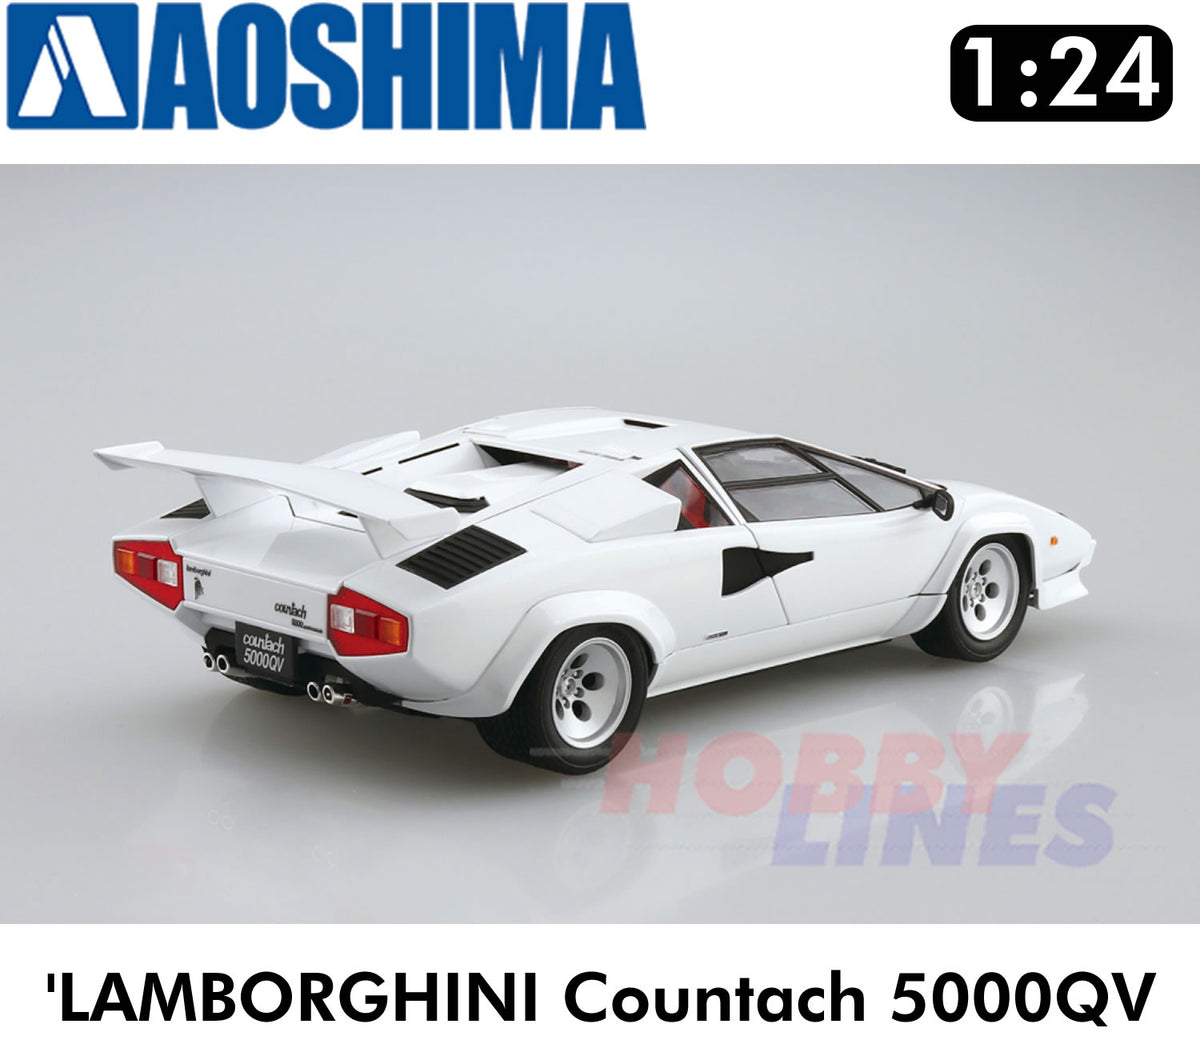 LAMBORGHINI Countach 5000QV '85 supercar 1:24 scale model kit Aoshima 05945